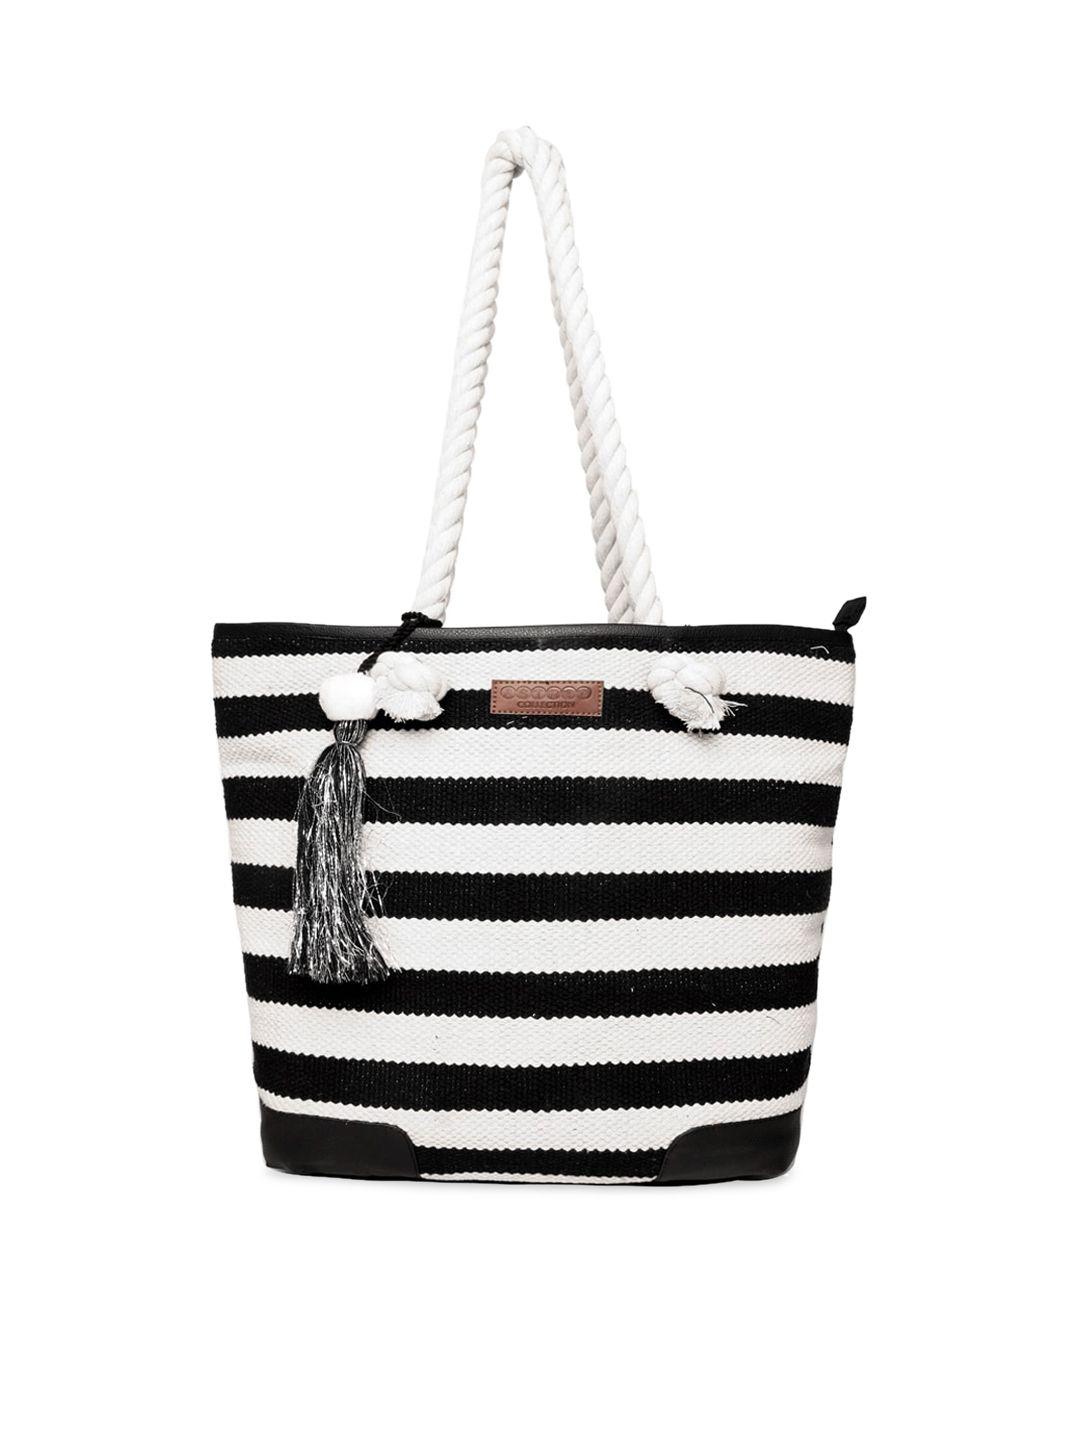 astrid black & white striped tote bag